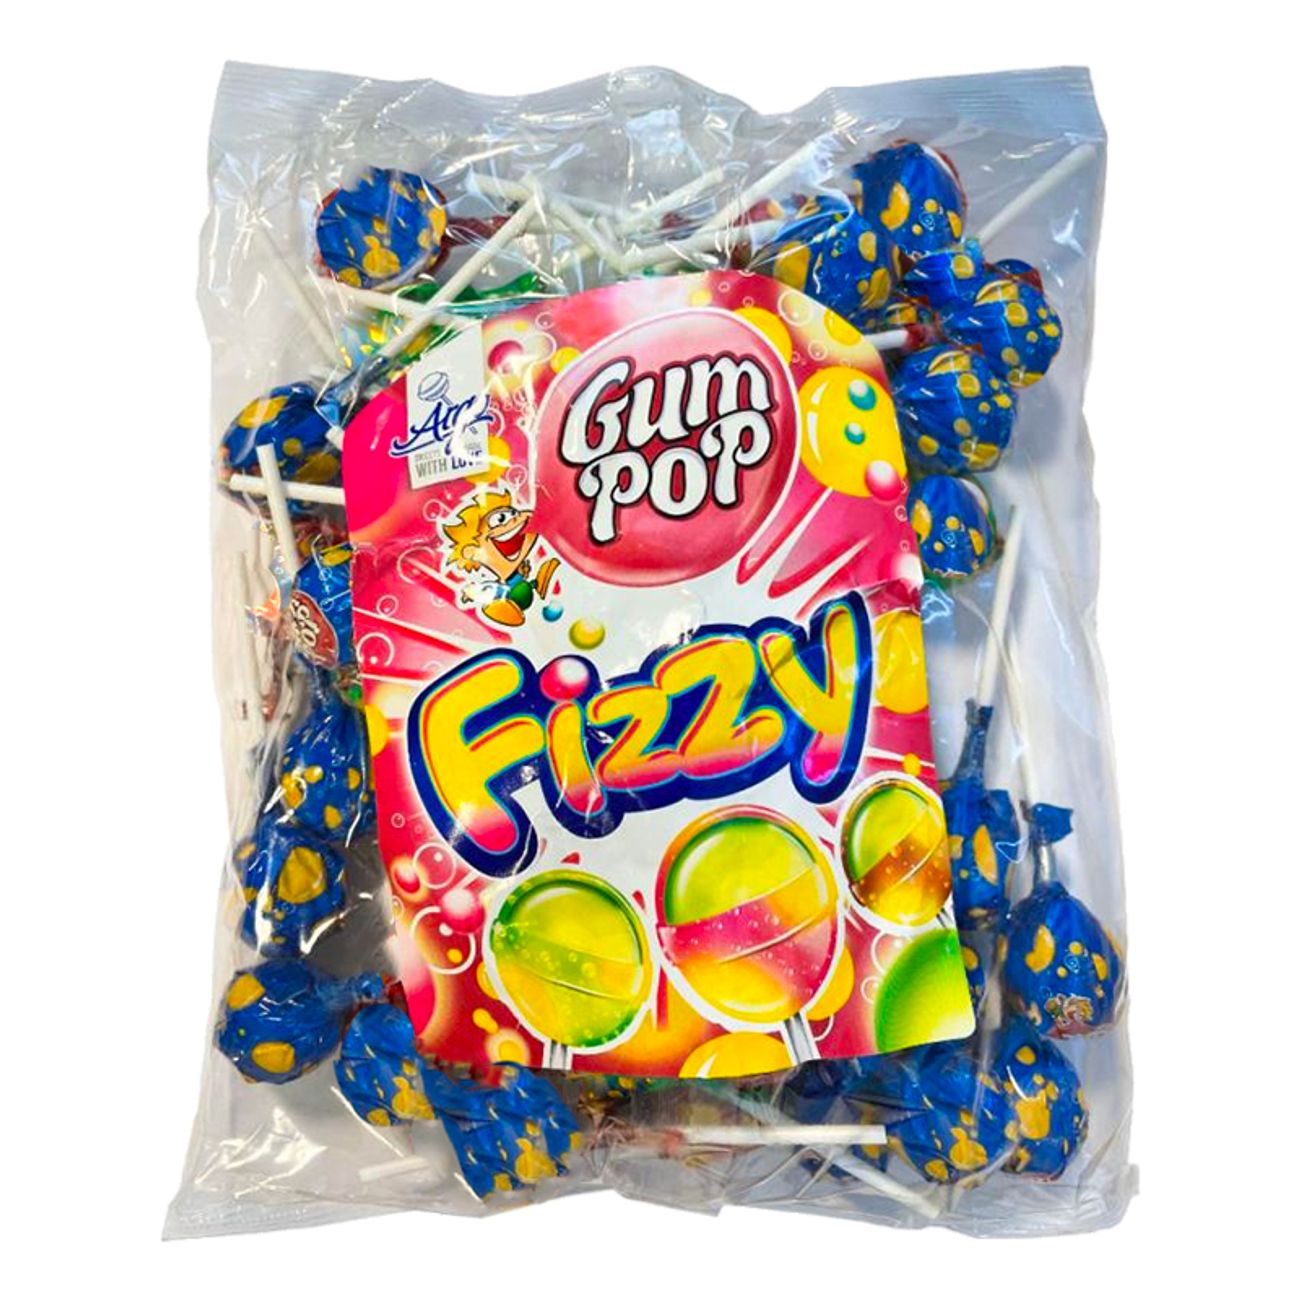 gum-pop-fizzy-klubbor-sur-cola-storpack-76635-1